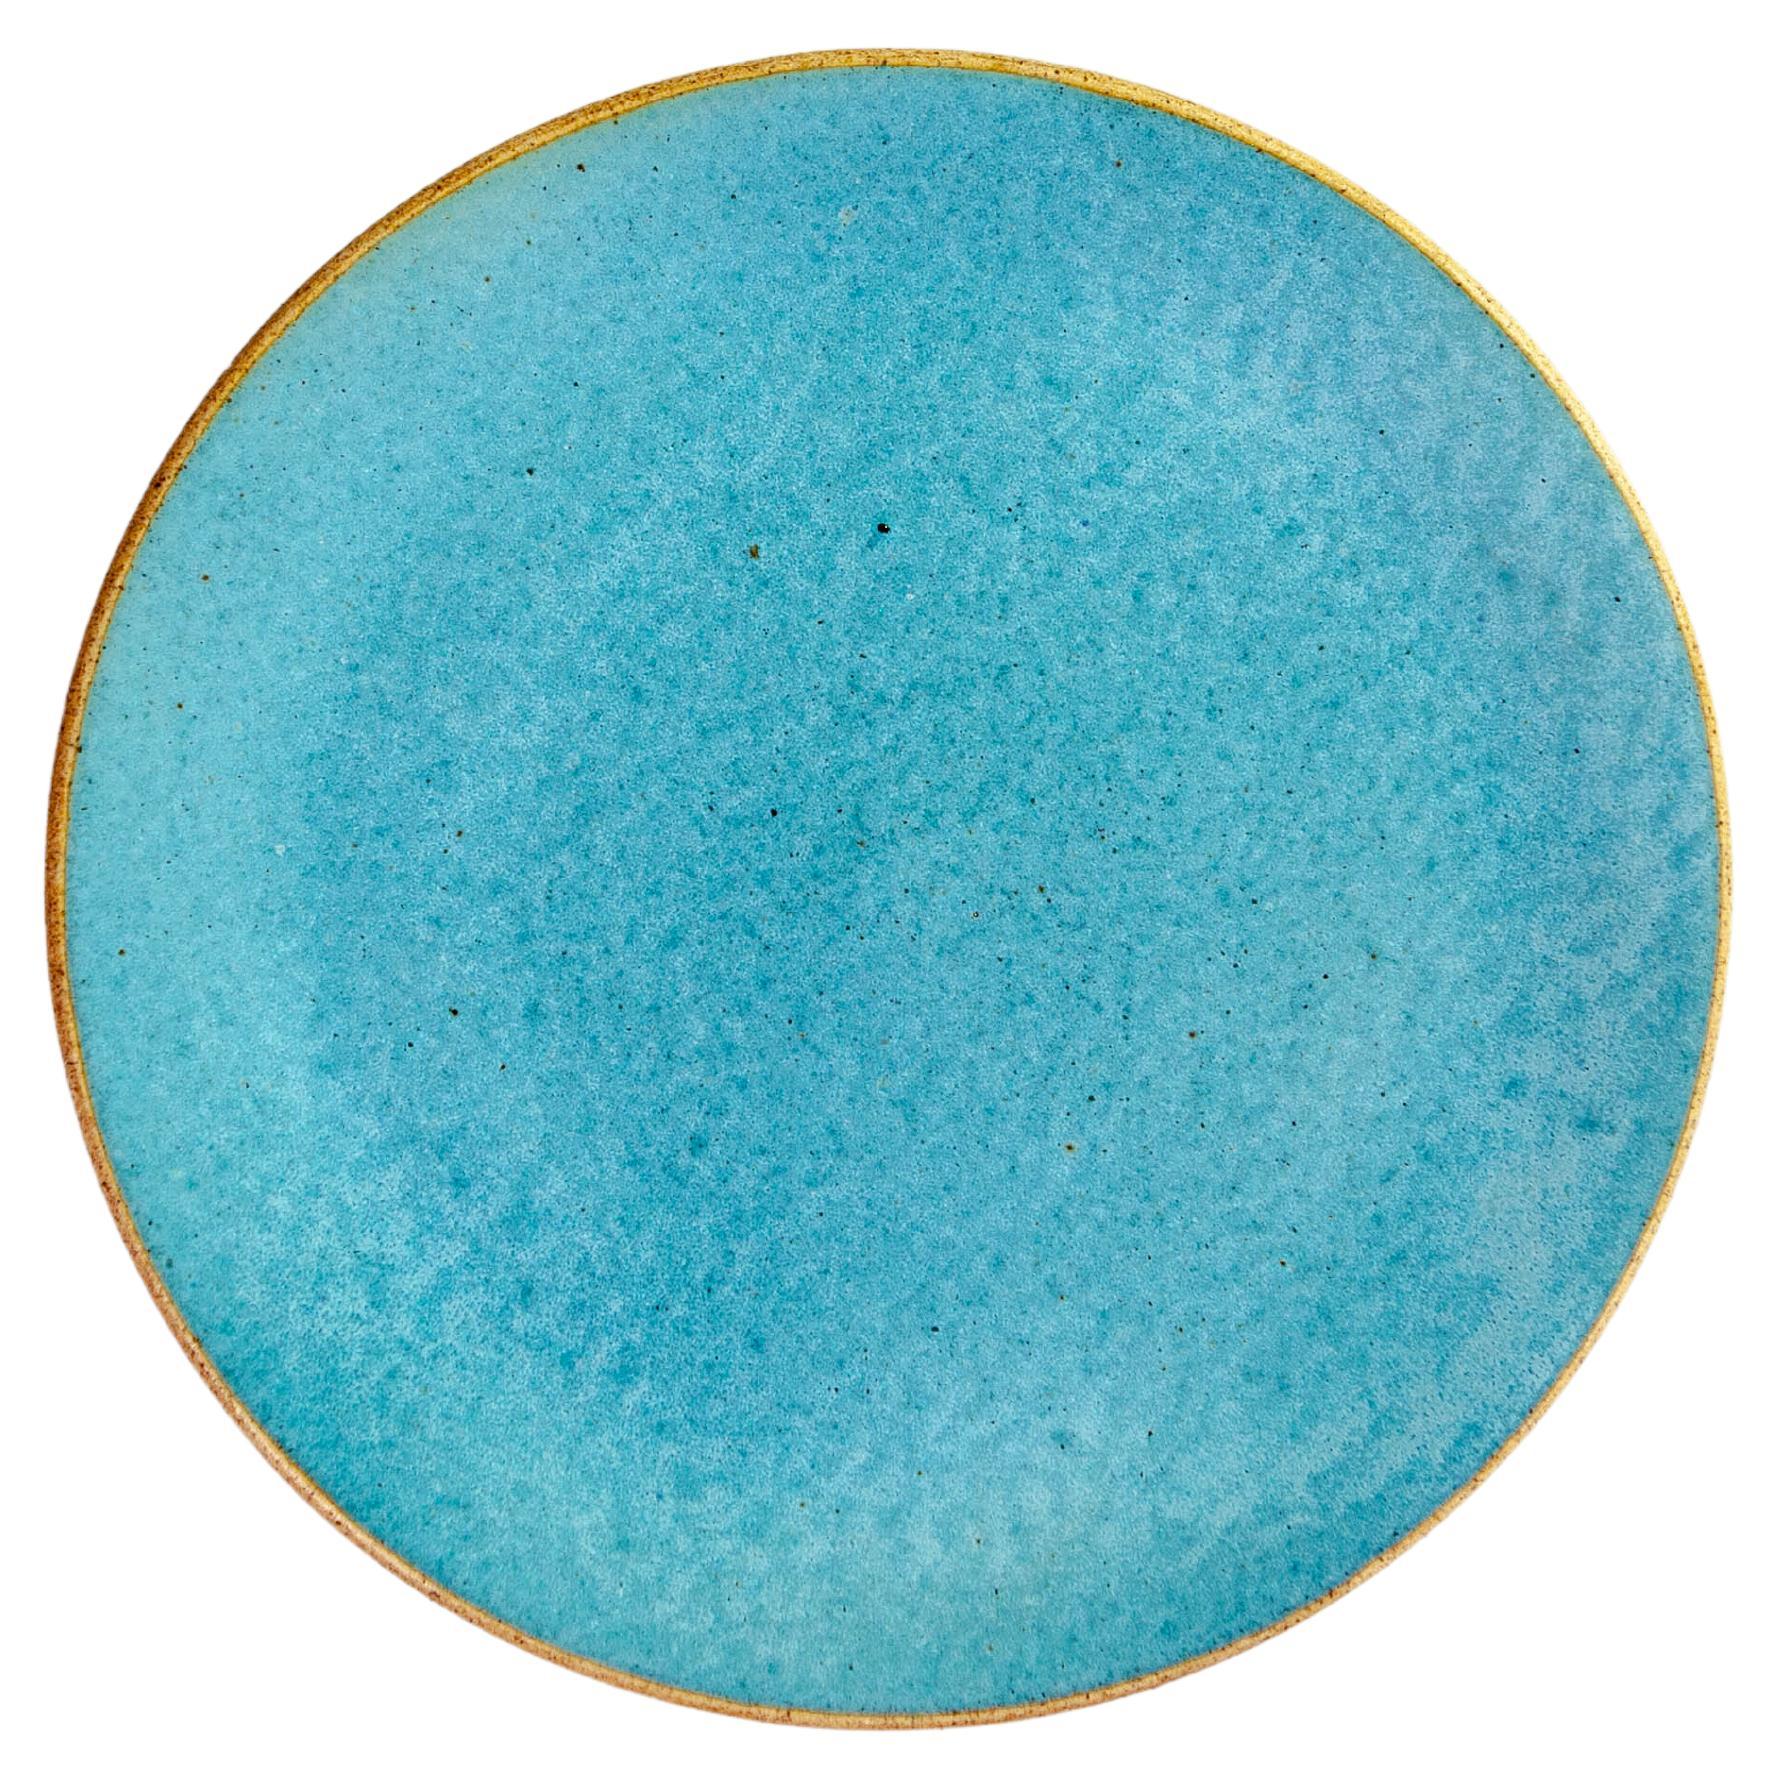 Handmade Ceramic Stoneware Saucer in Turquoise, in Stock